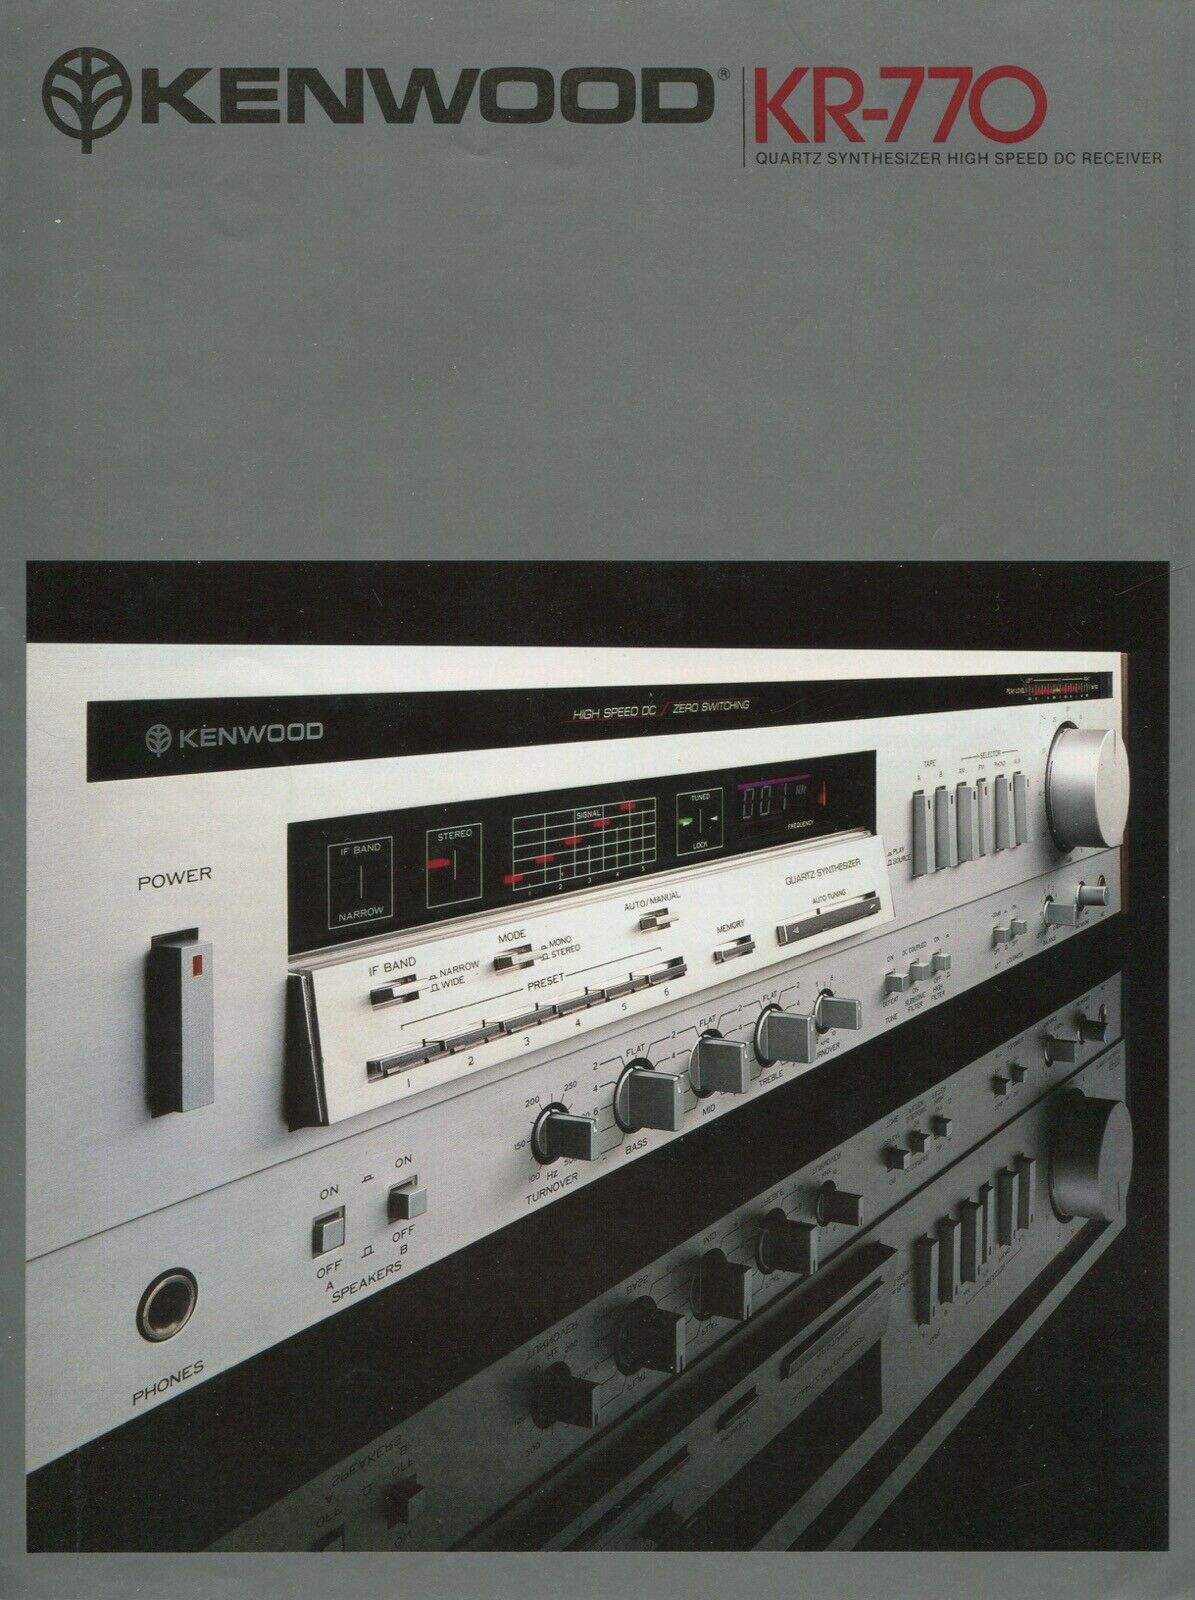 Kenwood Kr-770 Original Stereo Receiver Brochure & Lab Report